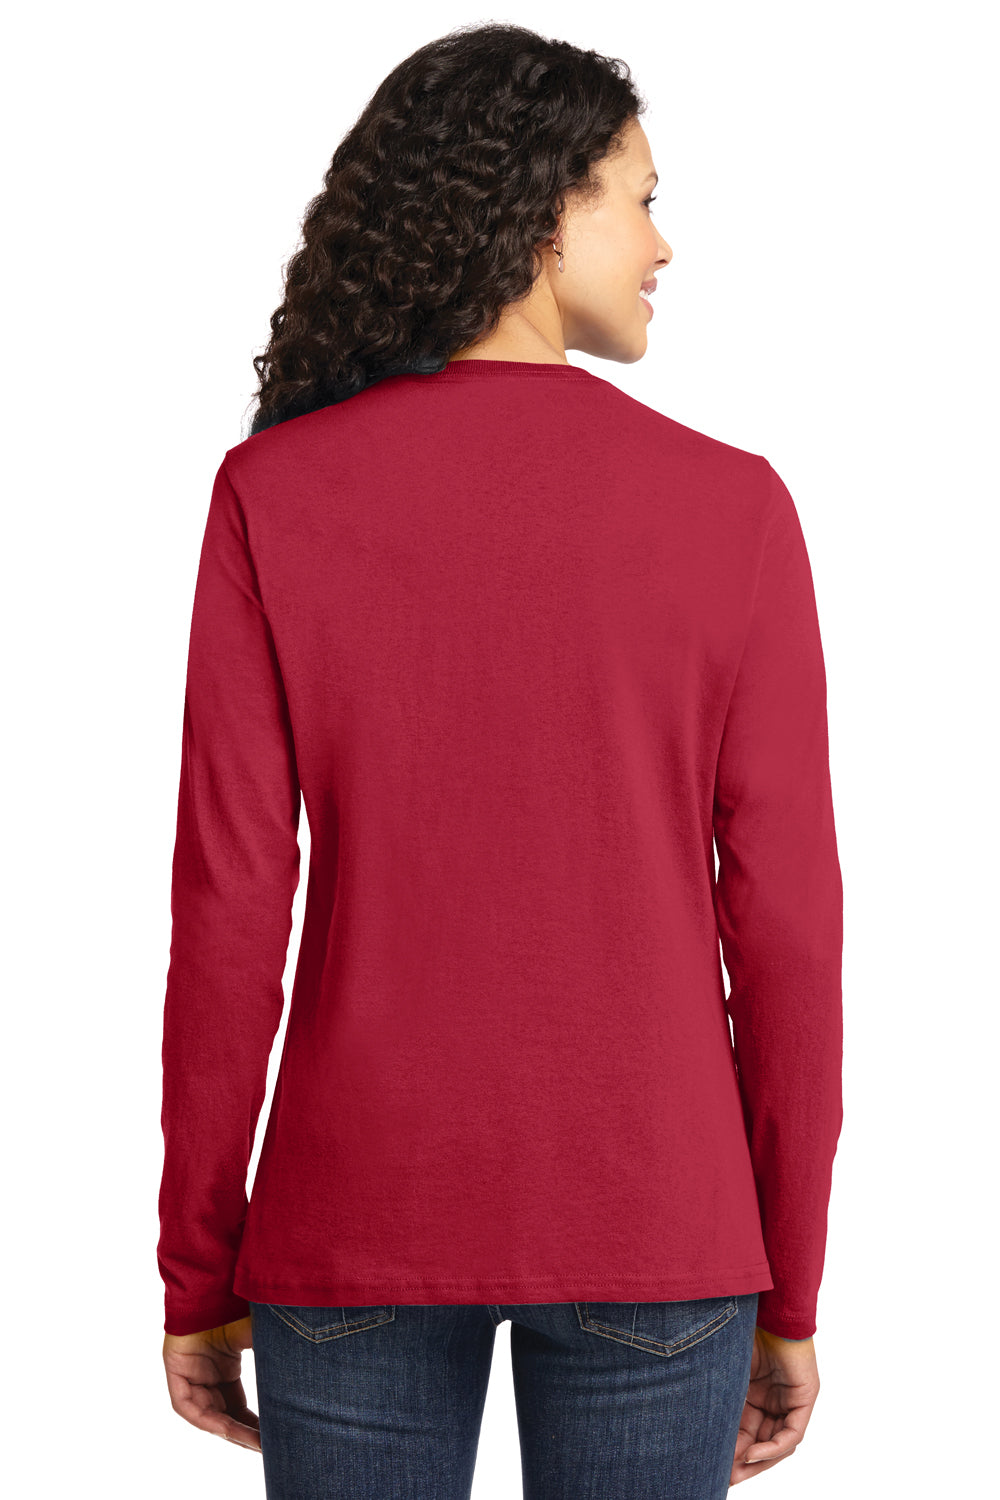 Port & Company LPC54LS Womens Core Long Sleeve Crewneck T-Shirt Red Back